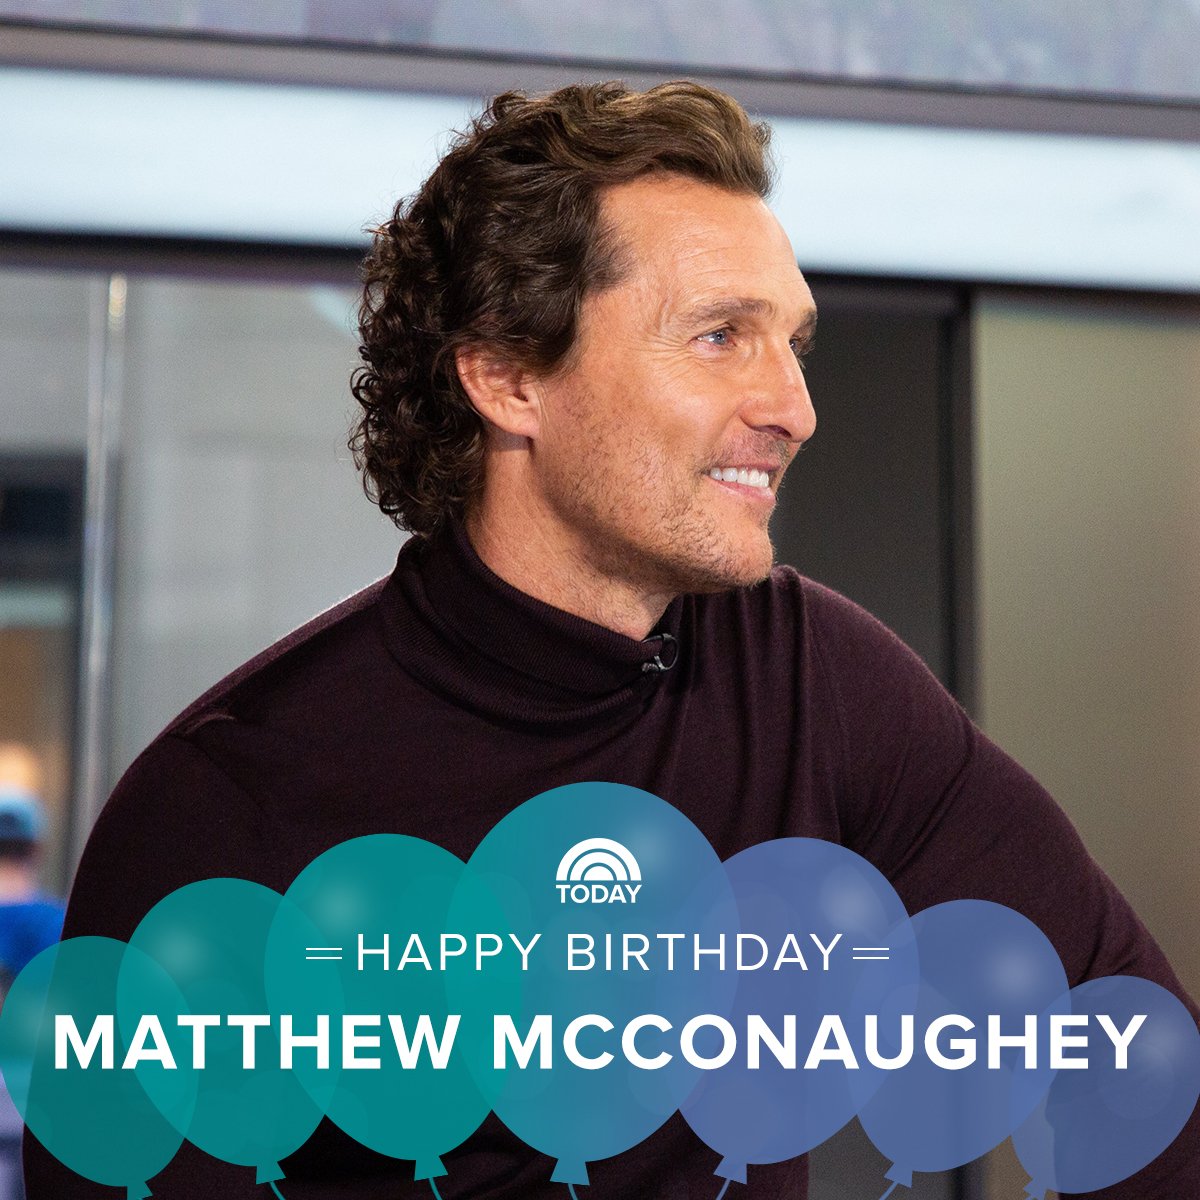 Alright, alright, alright! Let s wish Matthew McConaughey a happy birthday! 